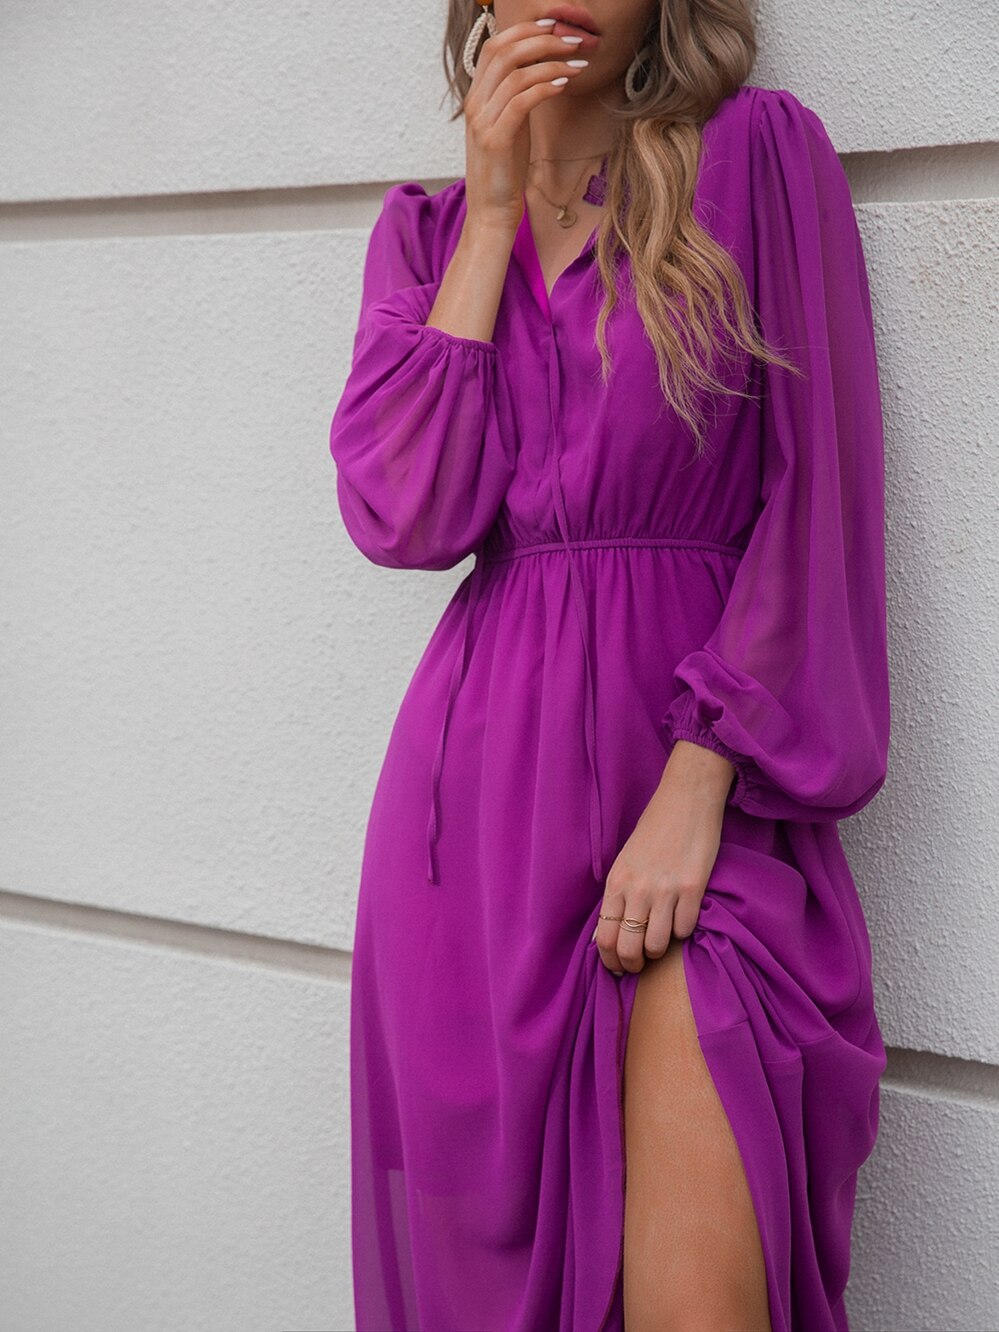 Amy Fashion - V Neck Solid Color Long Sleeve High Waist Purple Tie Dress